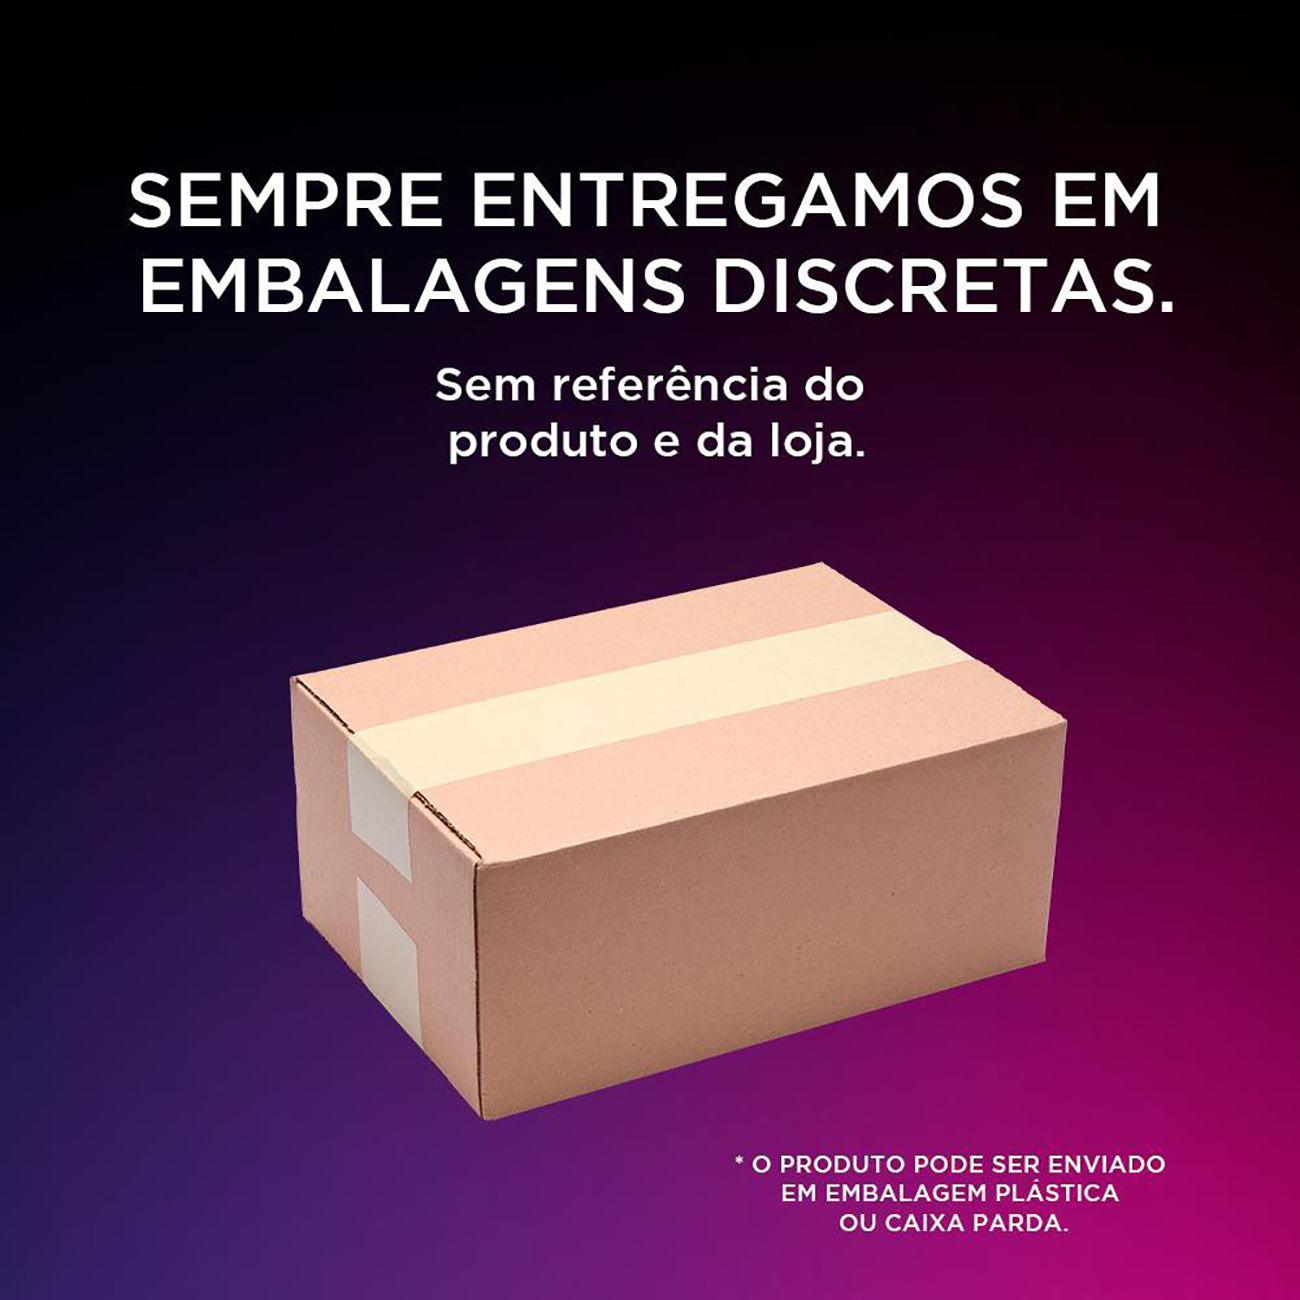 Preservativo Camisinha Jontex Orgasmo em Sintonia - 4 Unidades